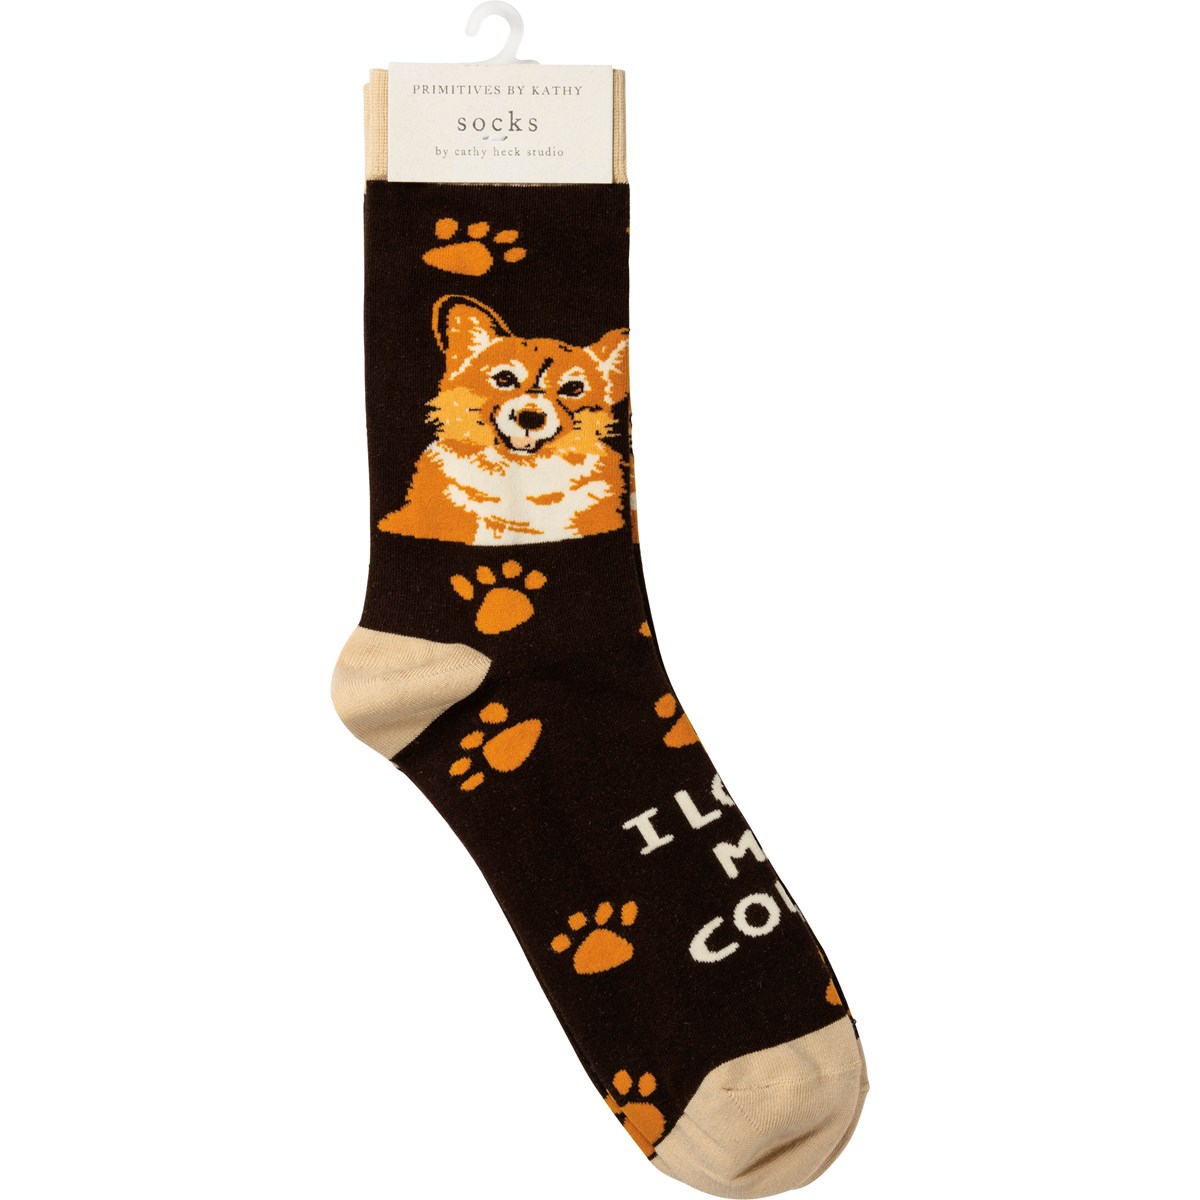 Socks - I Love My Corgi - One Size Fits Most - Cotton, Nylon, Spandex